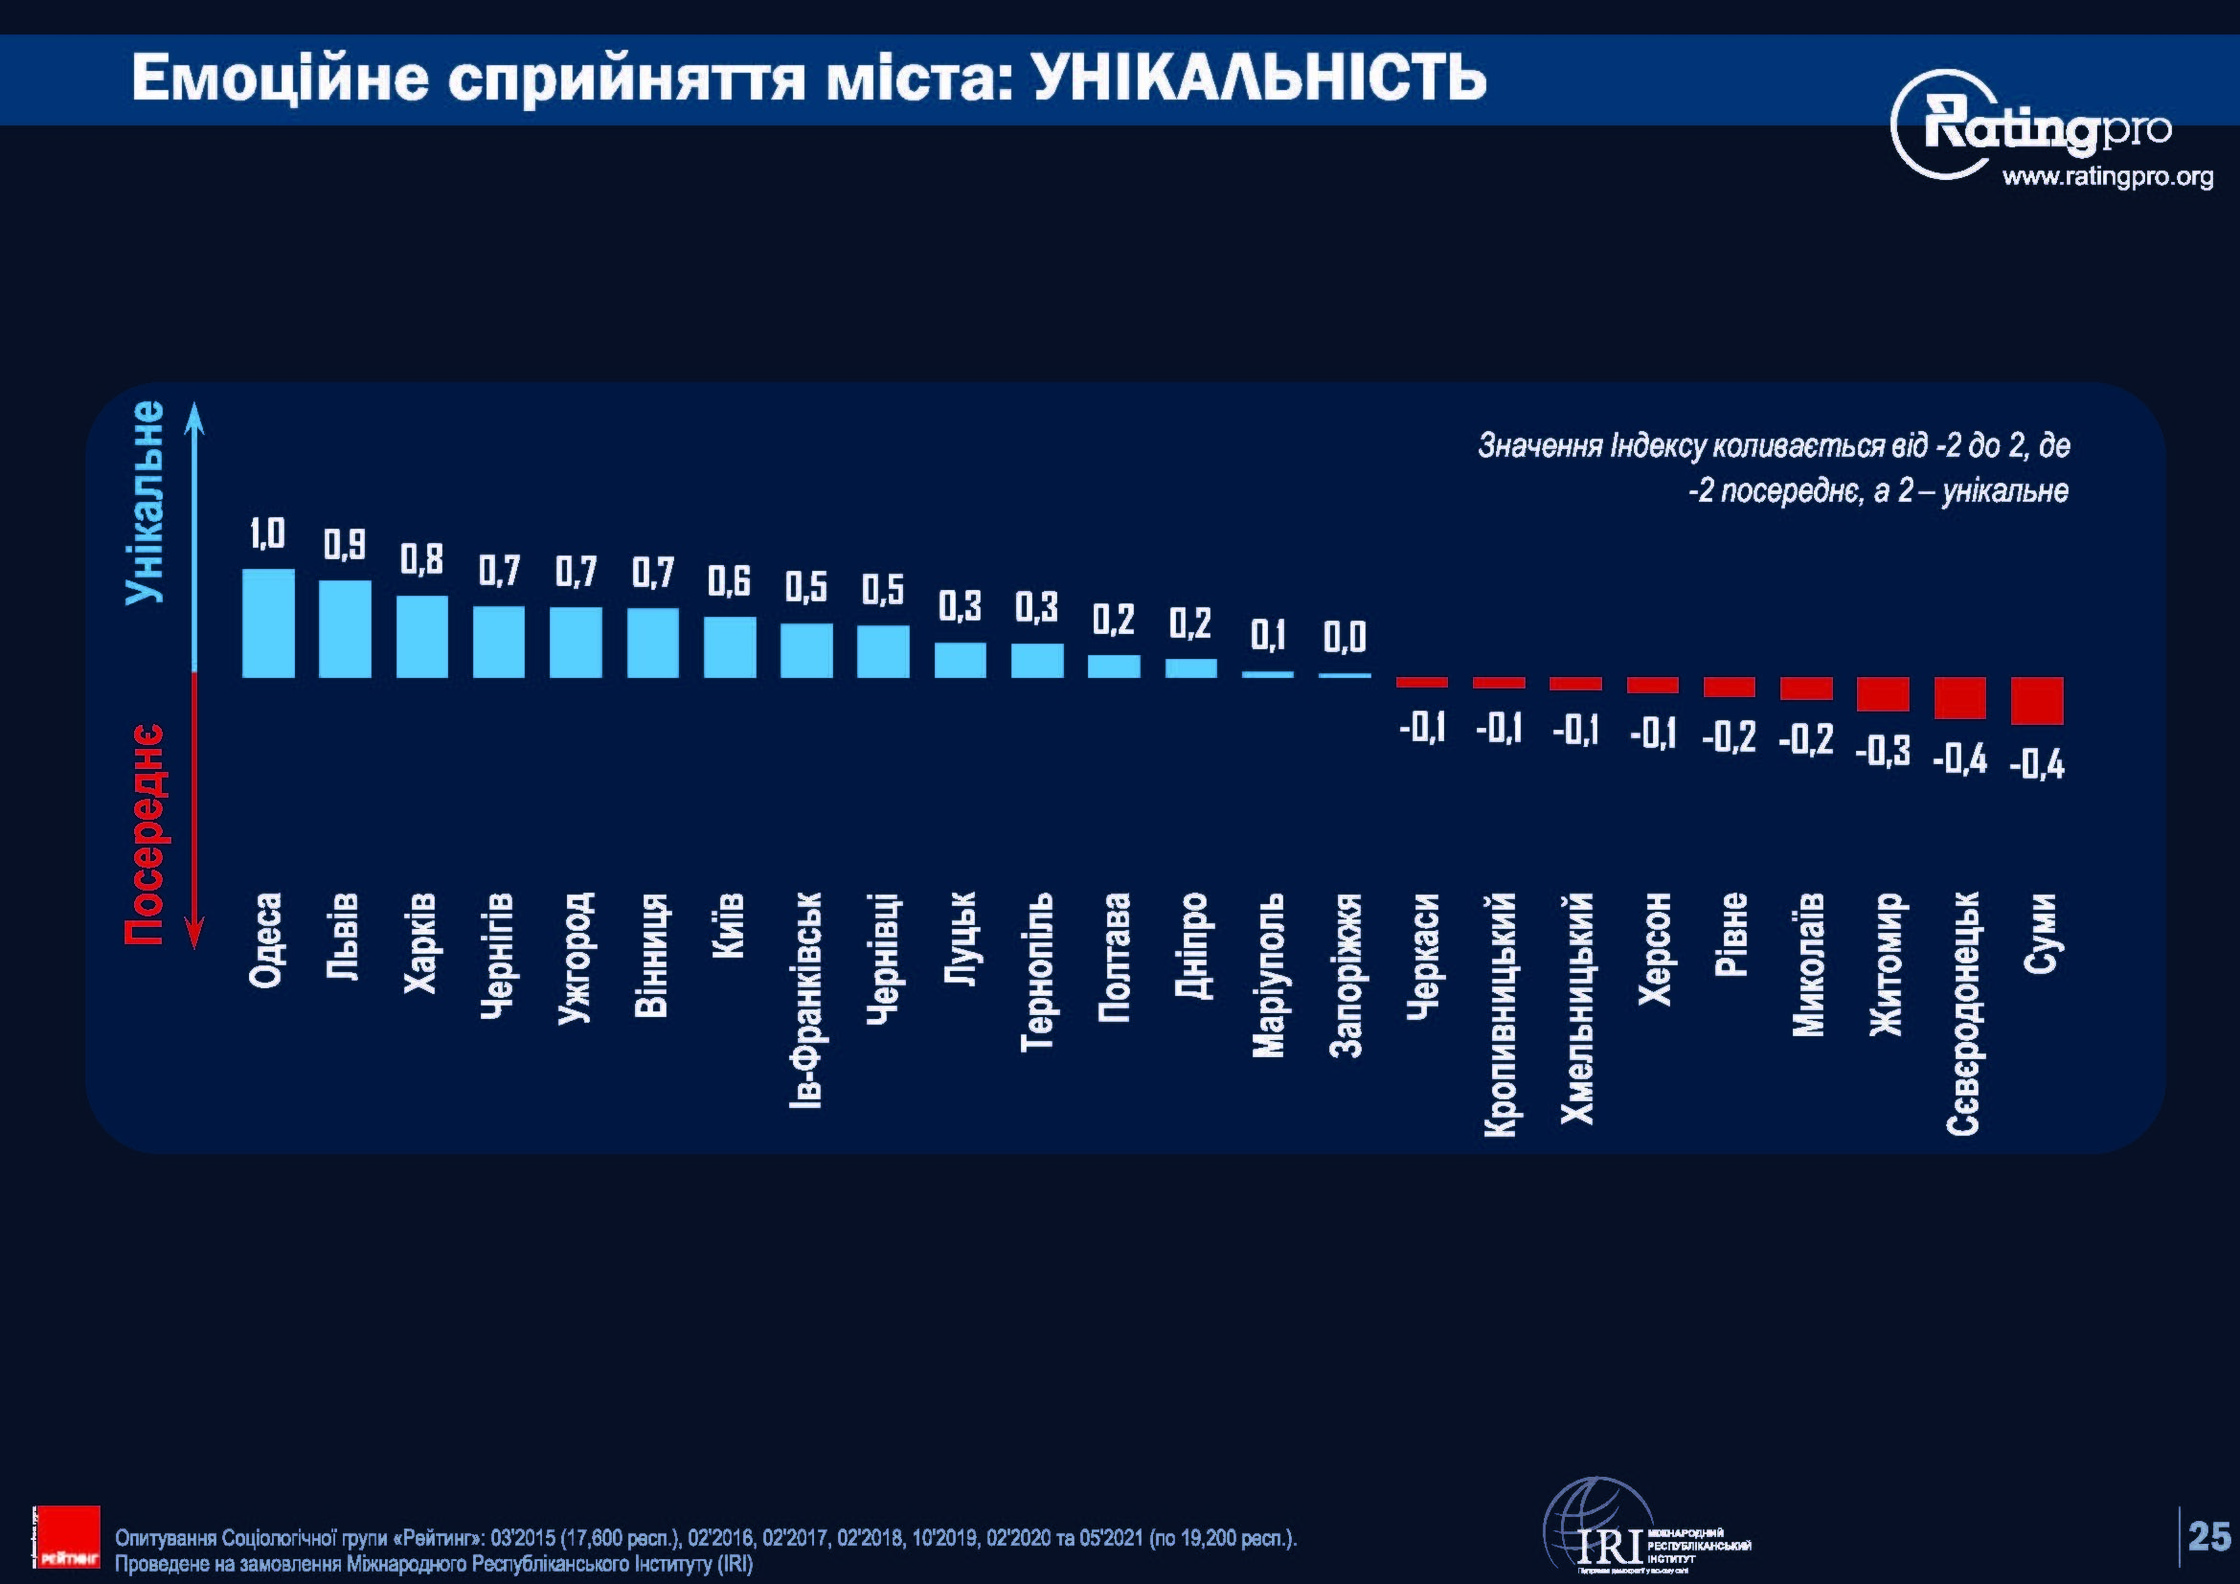 Rating of Ukrainian cities 2021-Сторінка-25